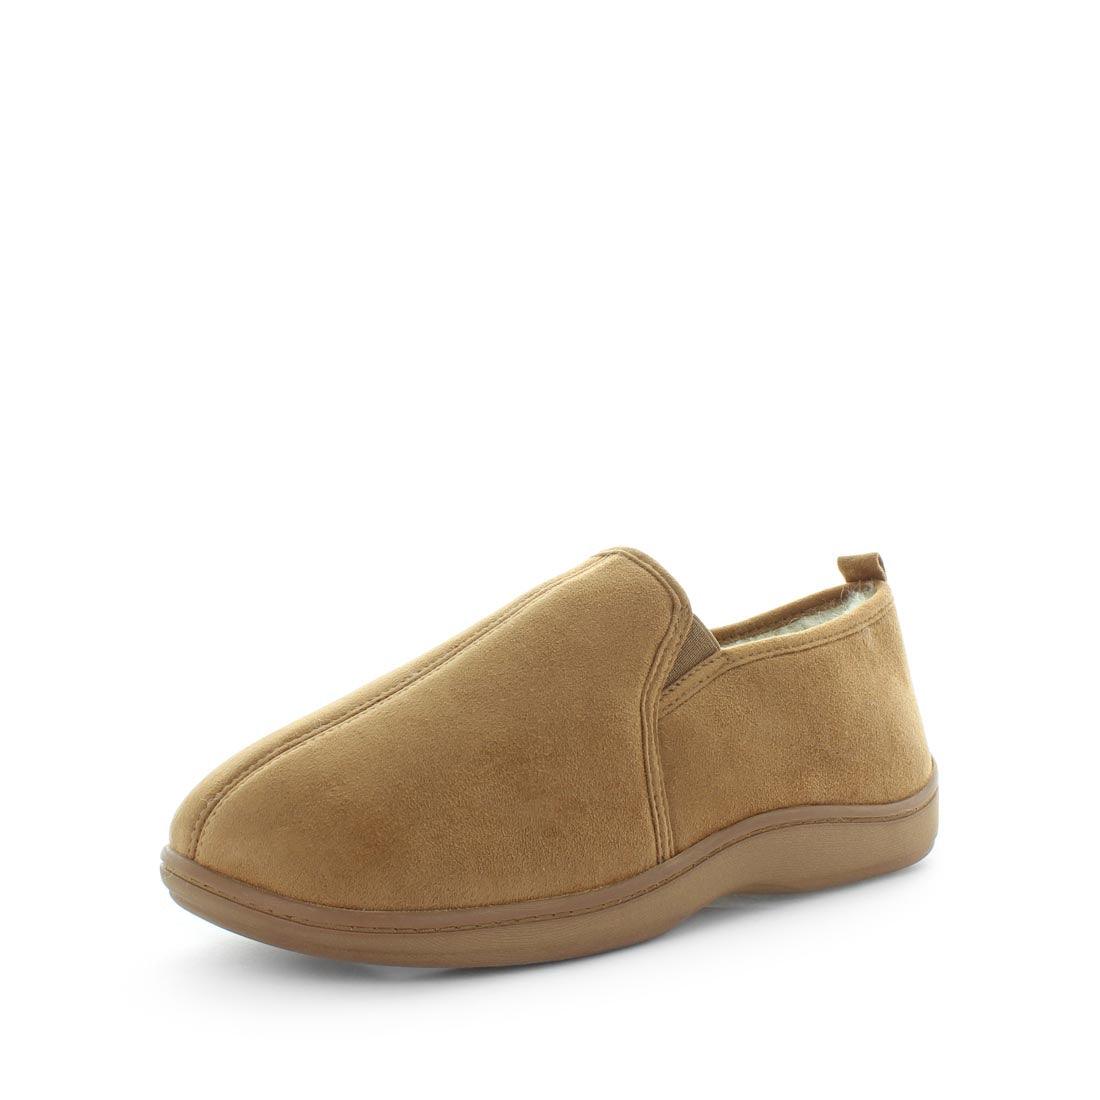 ELLIS by PANDA - iShoes - Men's Shoes: Slippers, NEW ARRIVALS, What's New - FOOTWEAR-FOOTWEAR